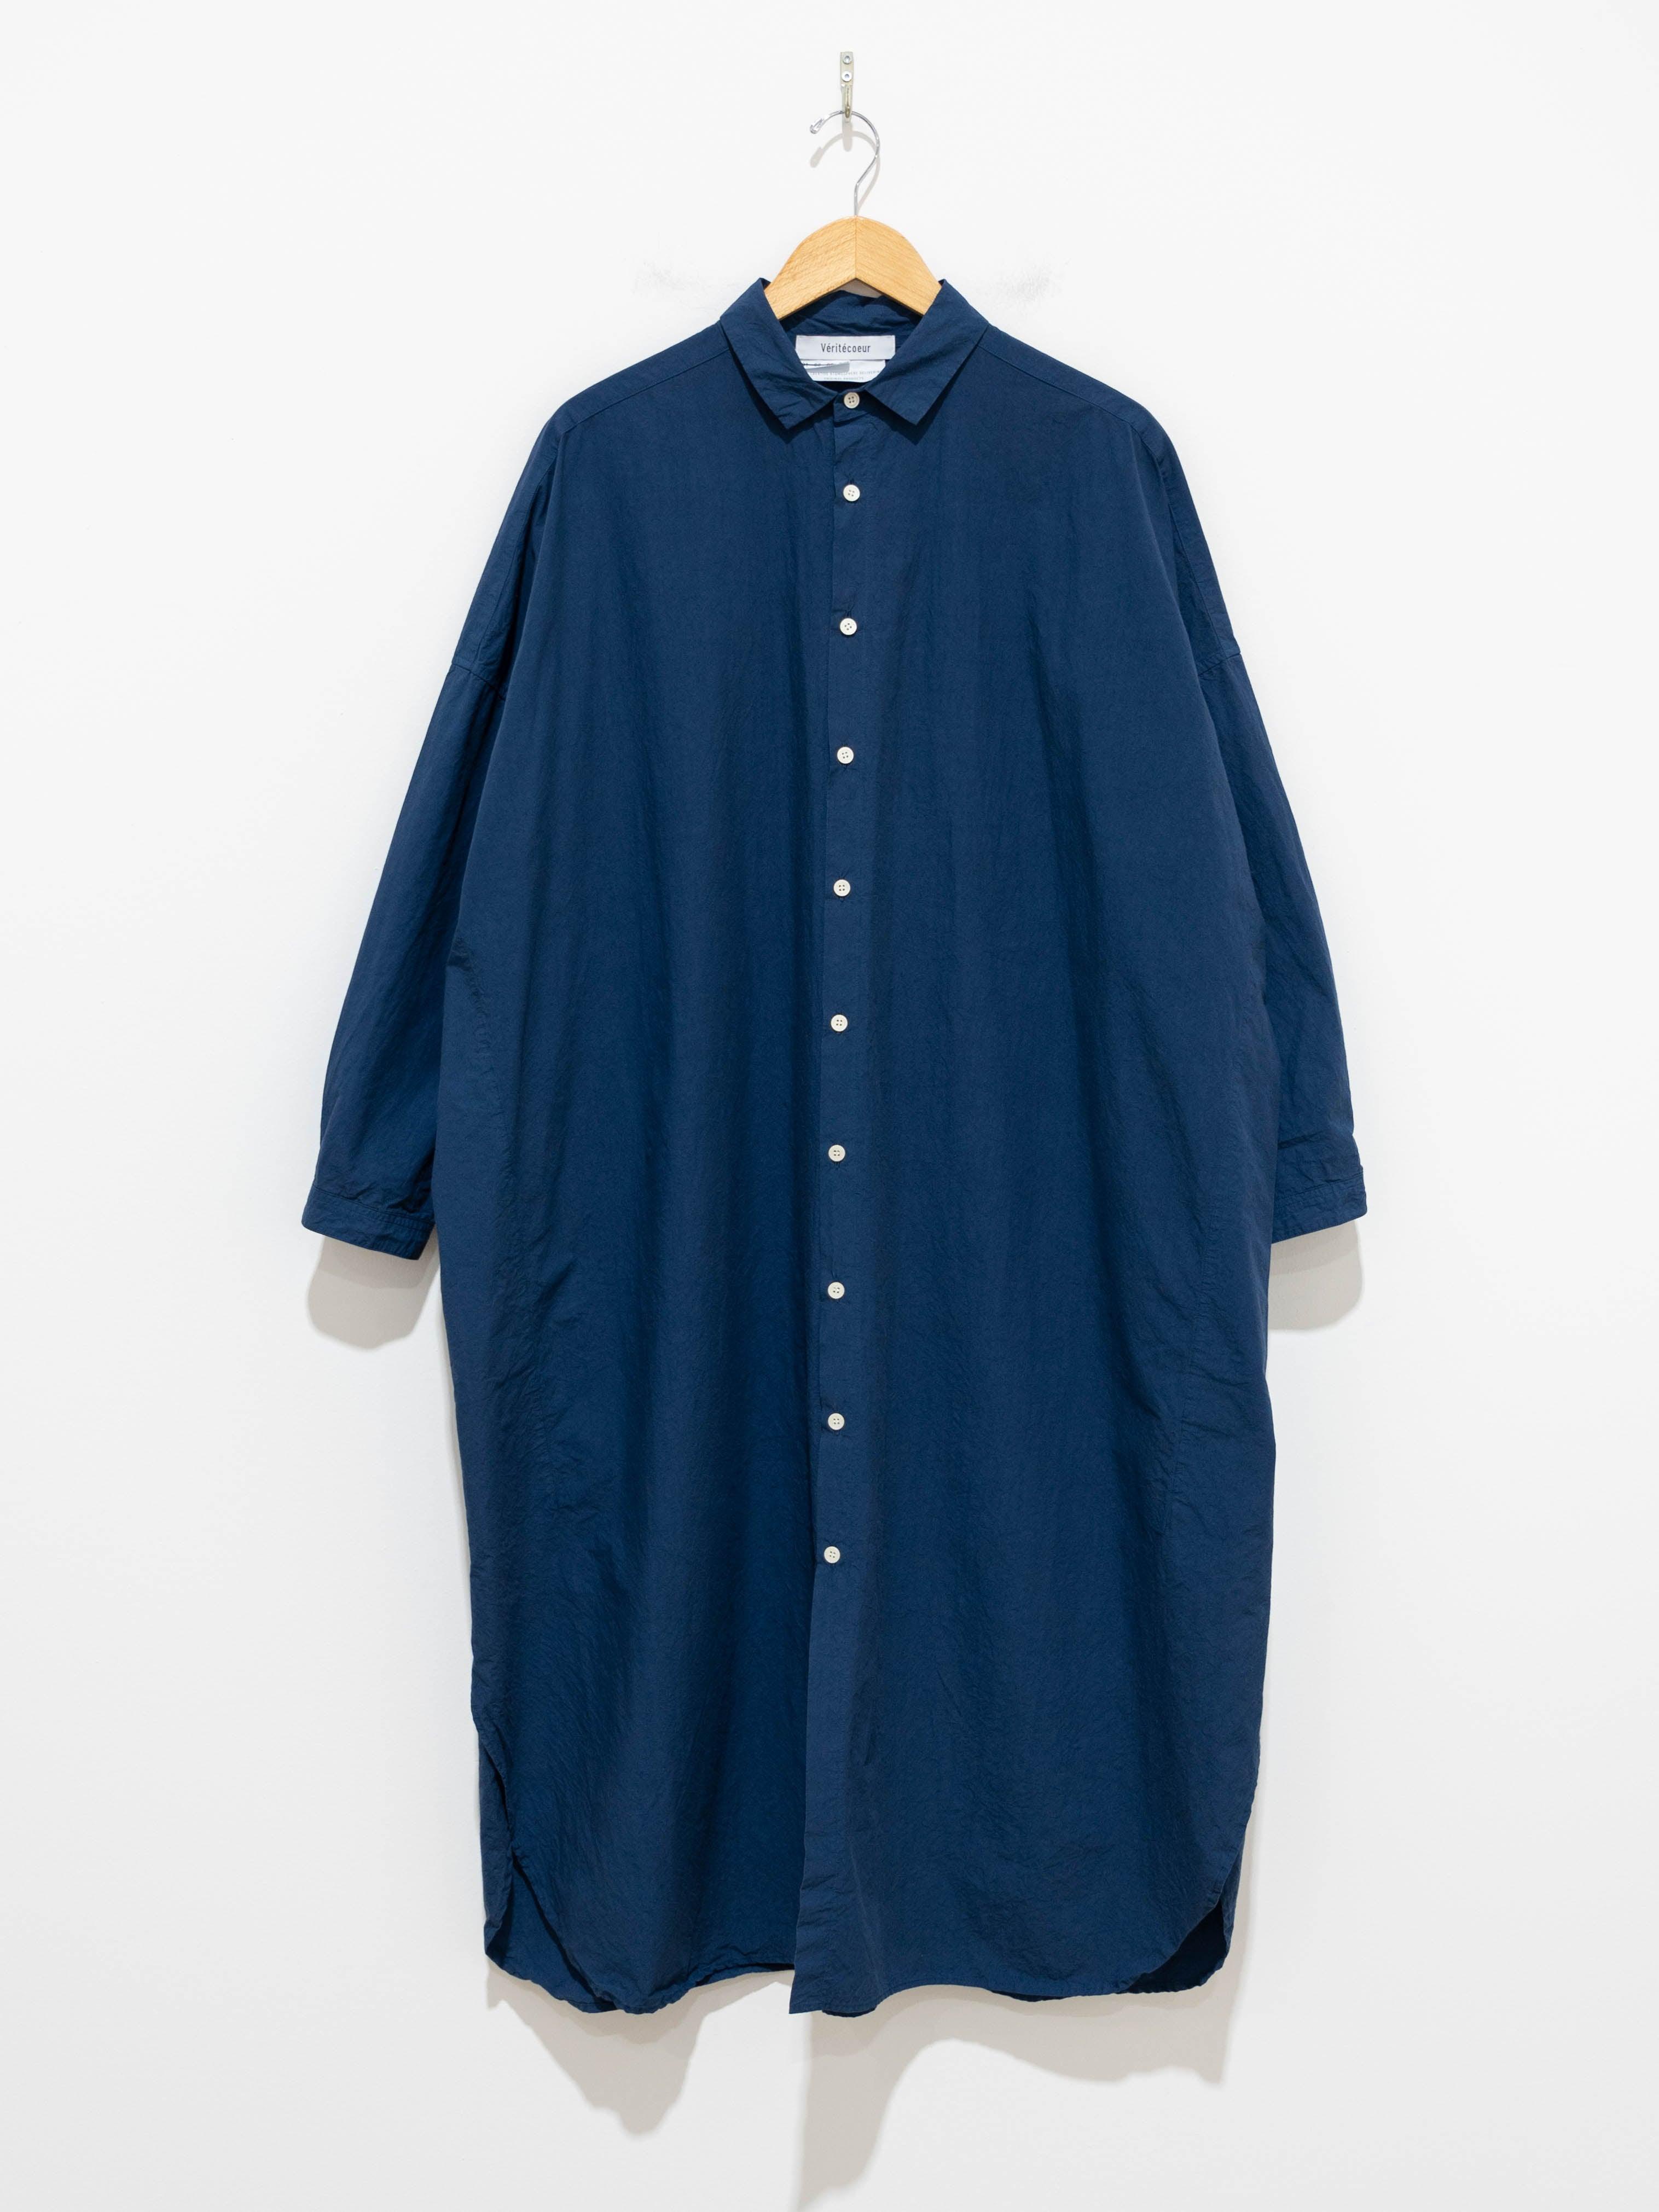 Namu Shop - Veritecoeur Long Shirt Dress - Navy